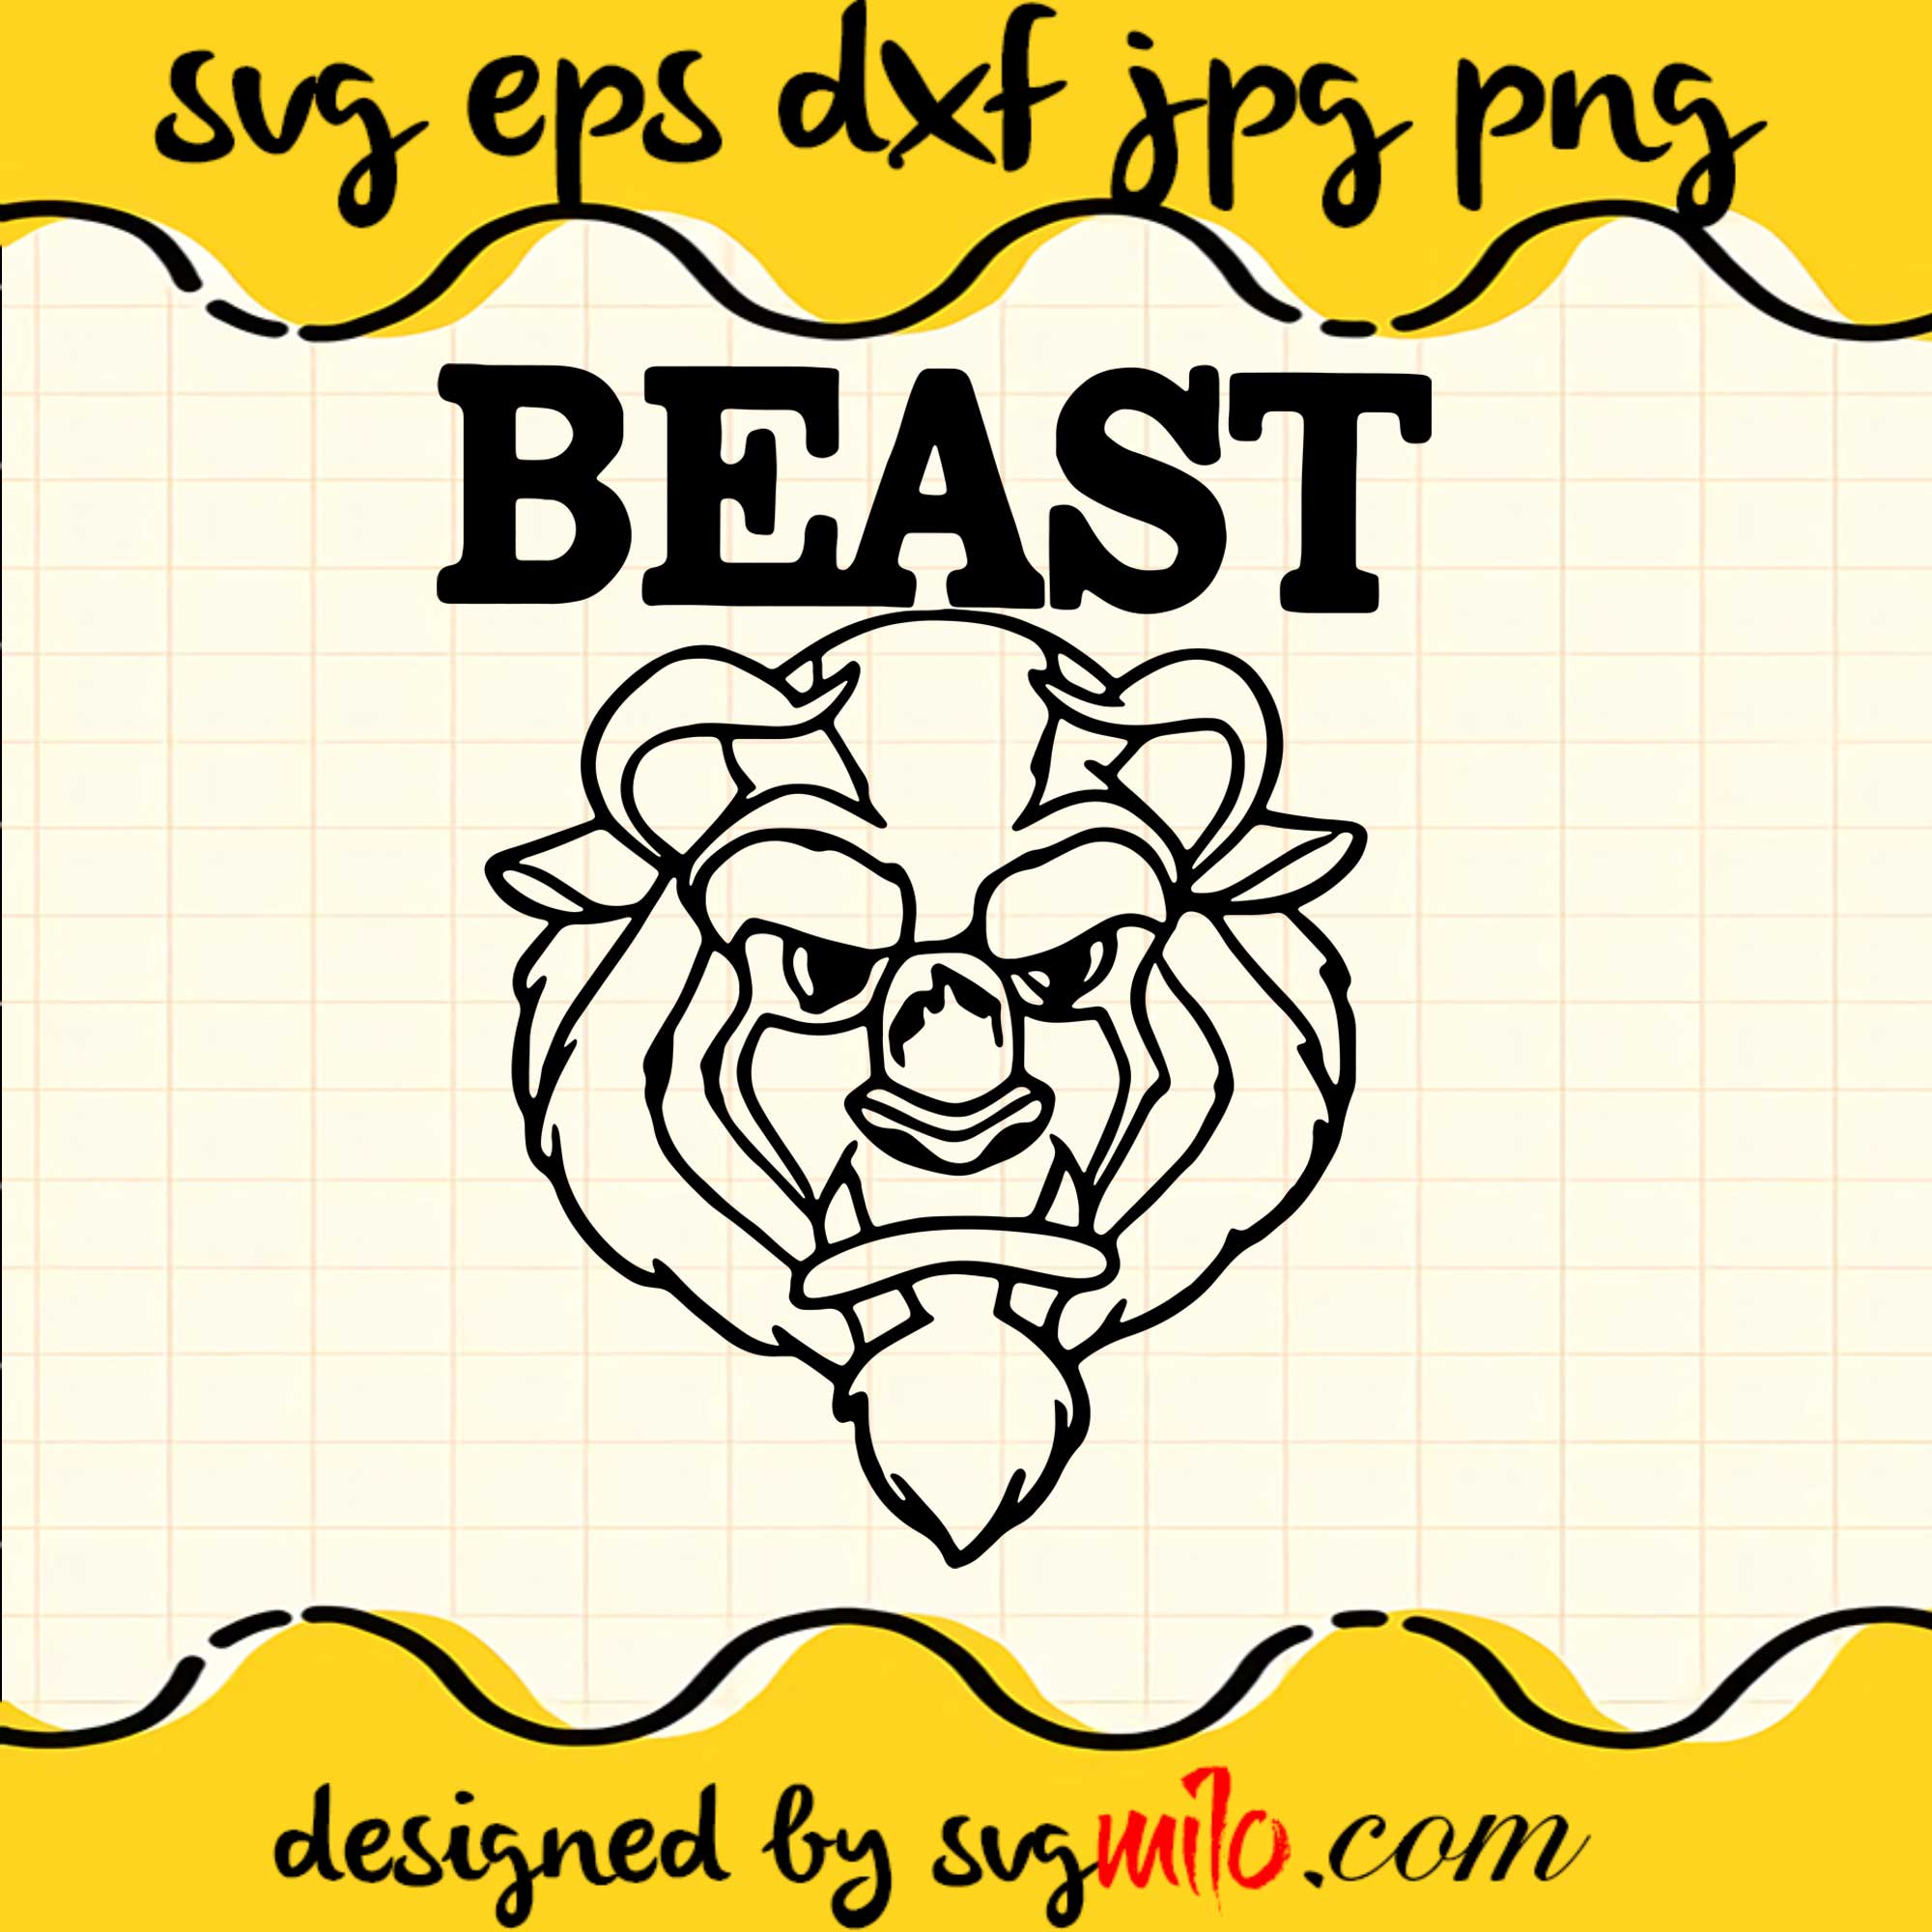 Beast SVG Cricut cut file, Silhouette cutting file,Premium Quality SVG - SVGMILO